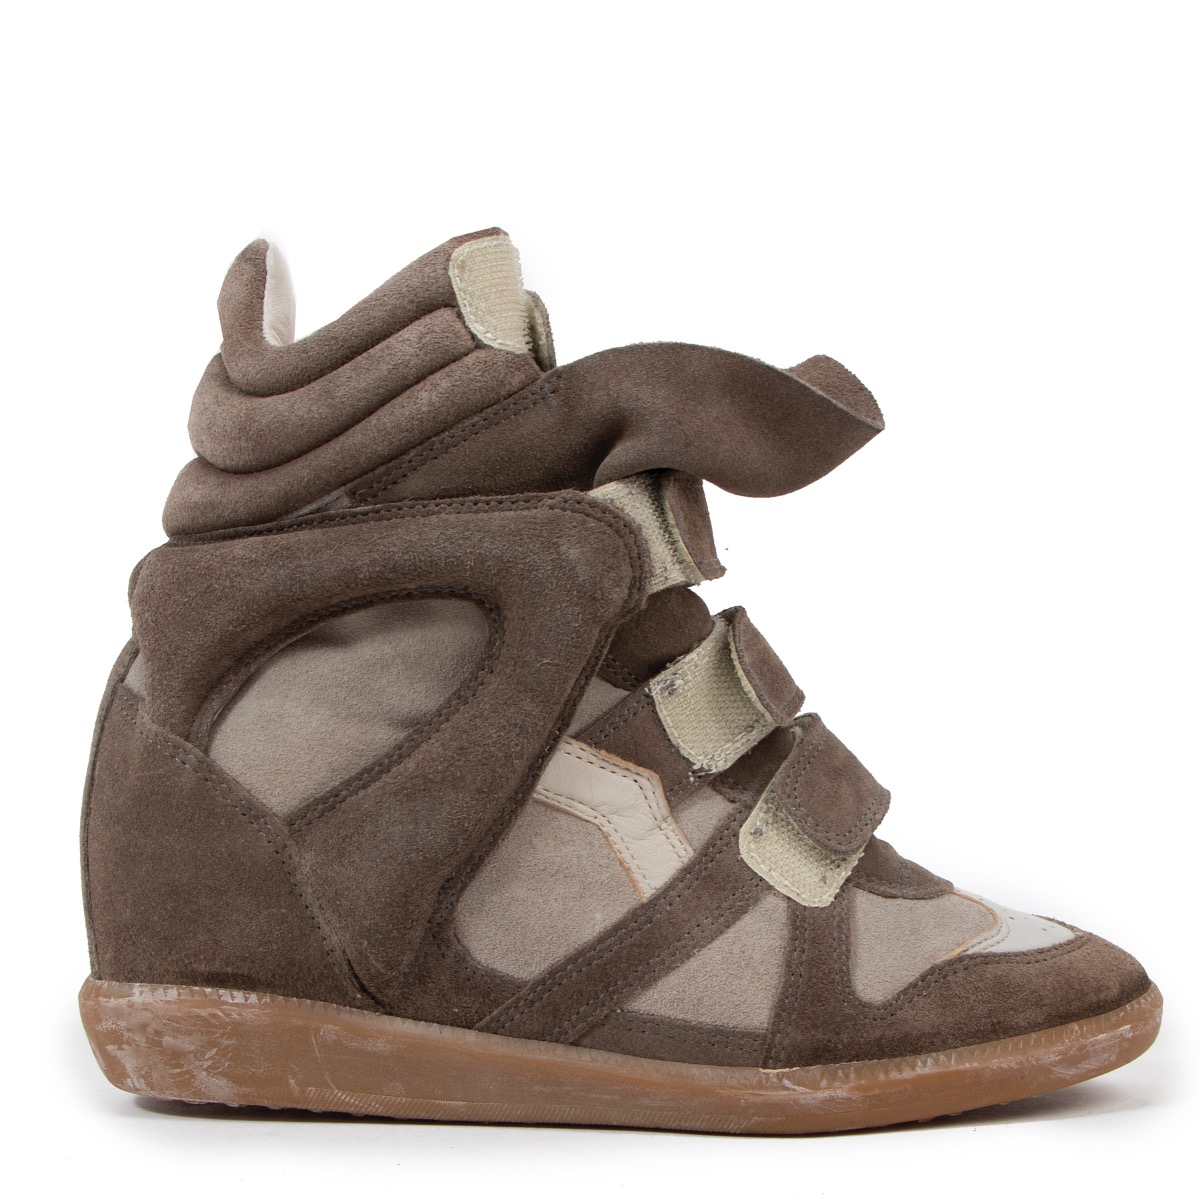 Isabel Marant Etoile Kaki/ Suede Bekett Sneakers - Size 37 ○ ○ Buy and Authentic Luxury